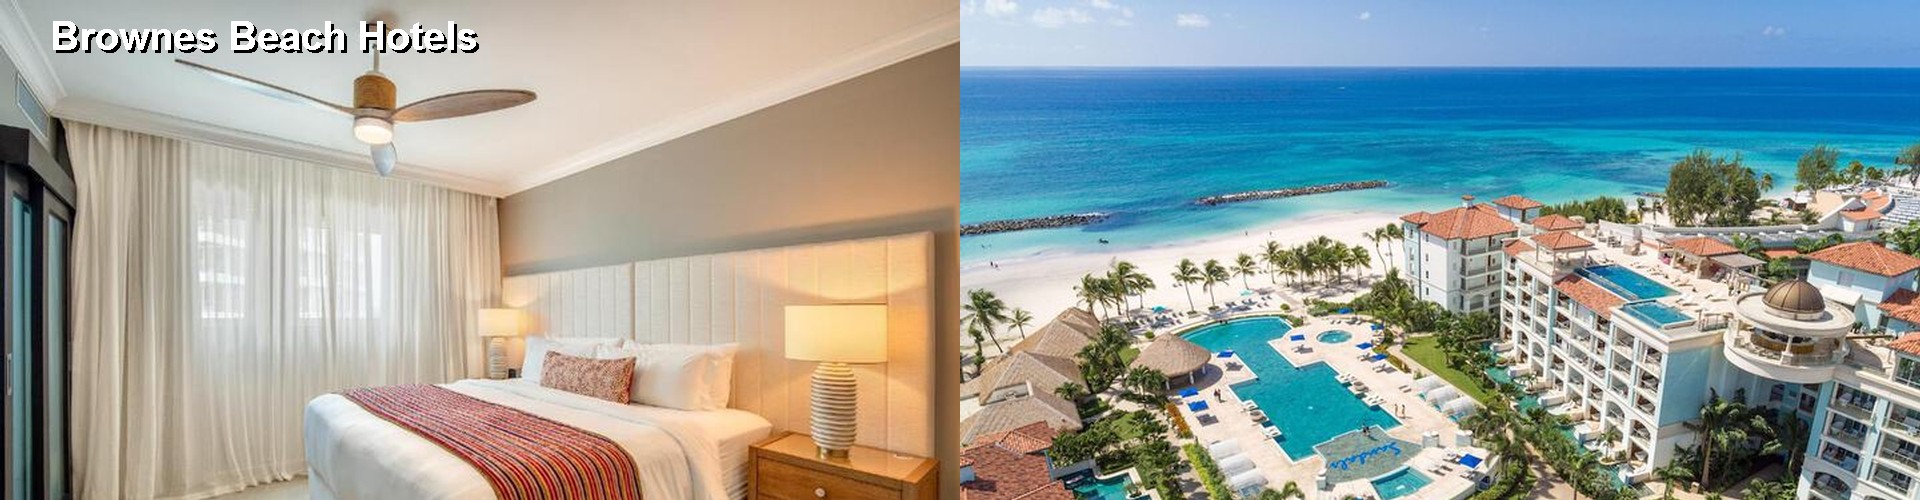 5 Best Hotels near Brownes Beach